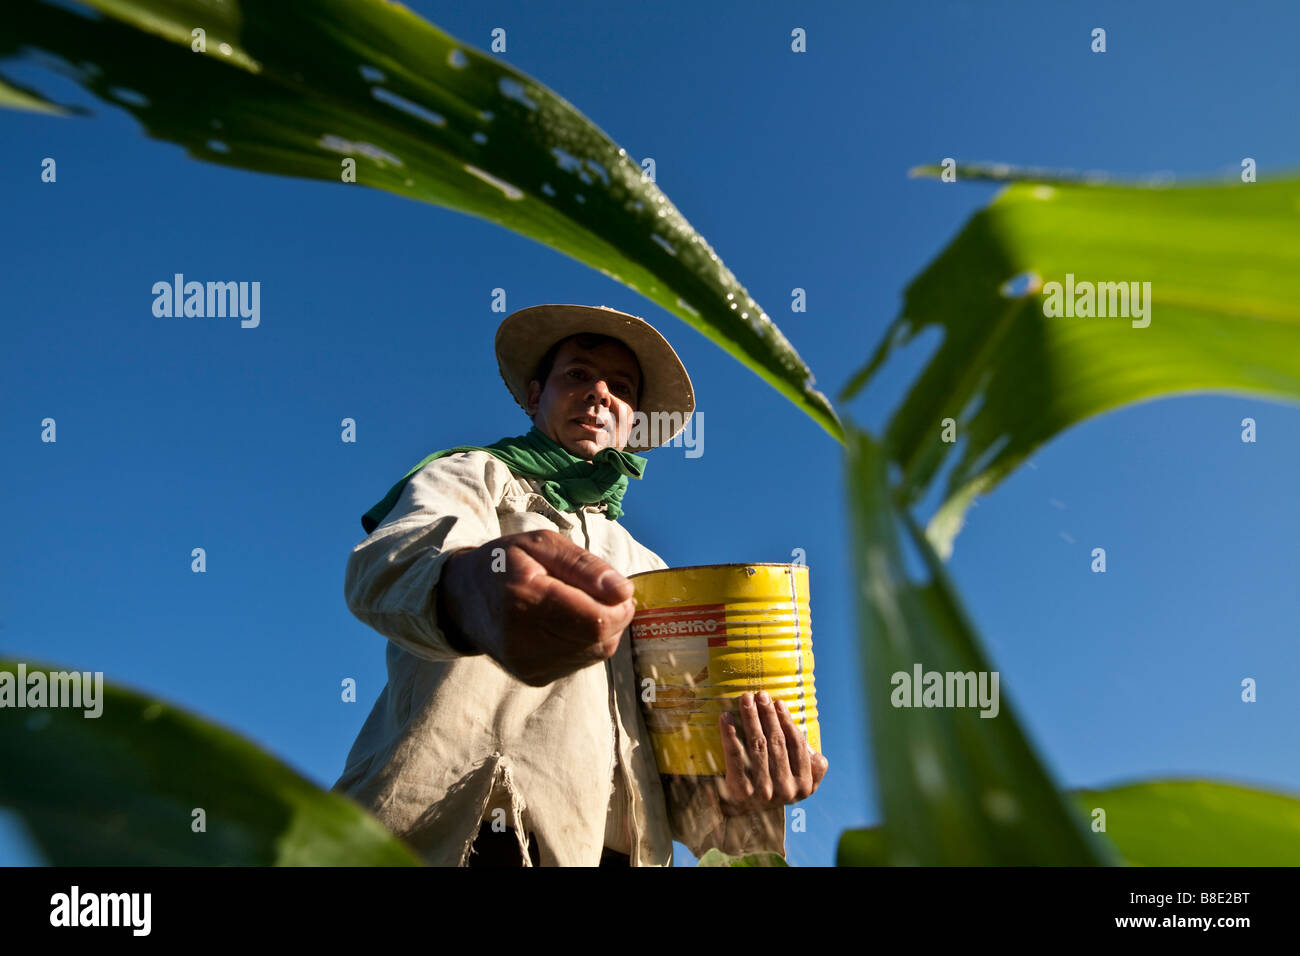 Farming corn cultivation small landowner Minas Gerais State Brazil Stock Photo